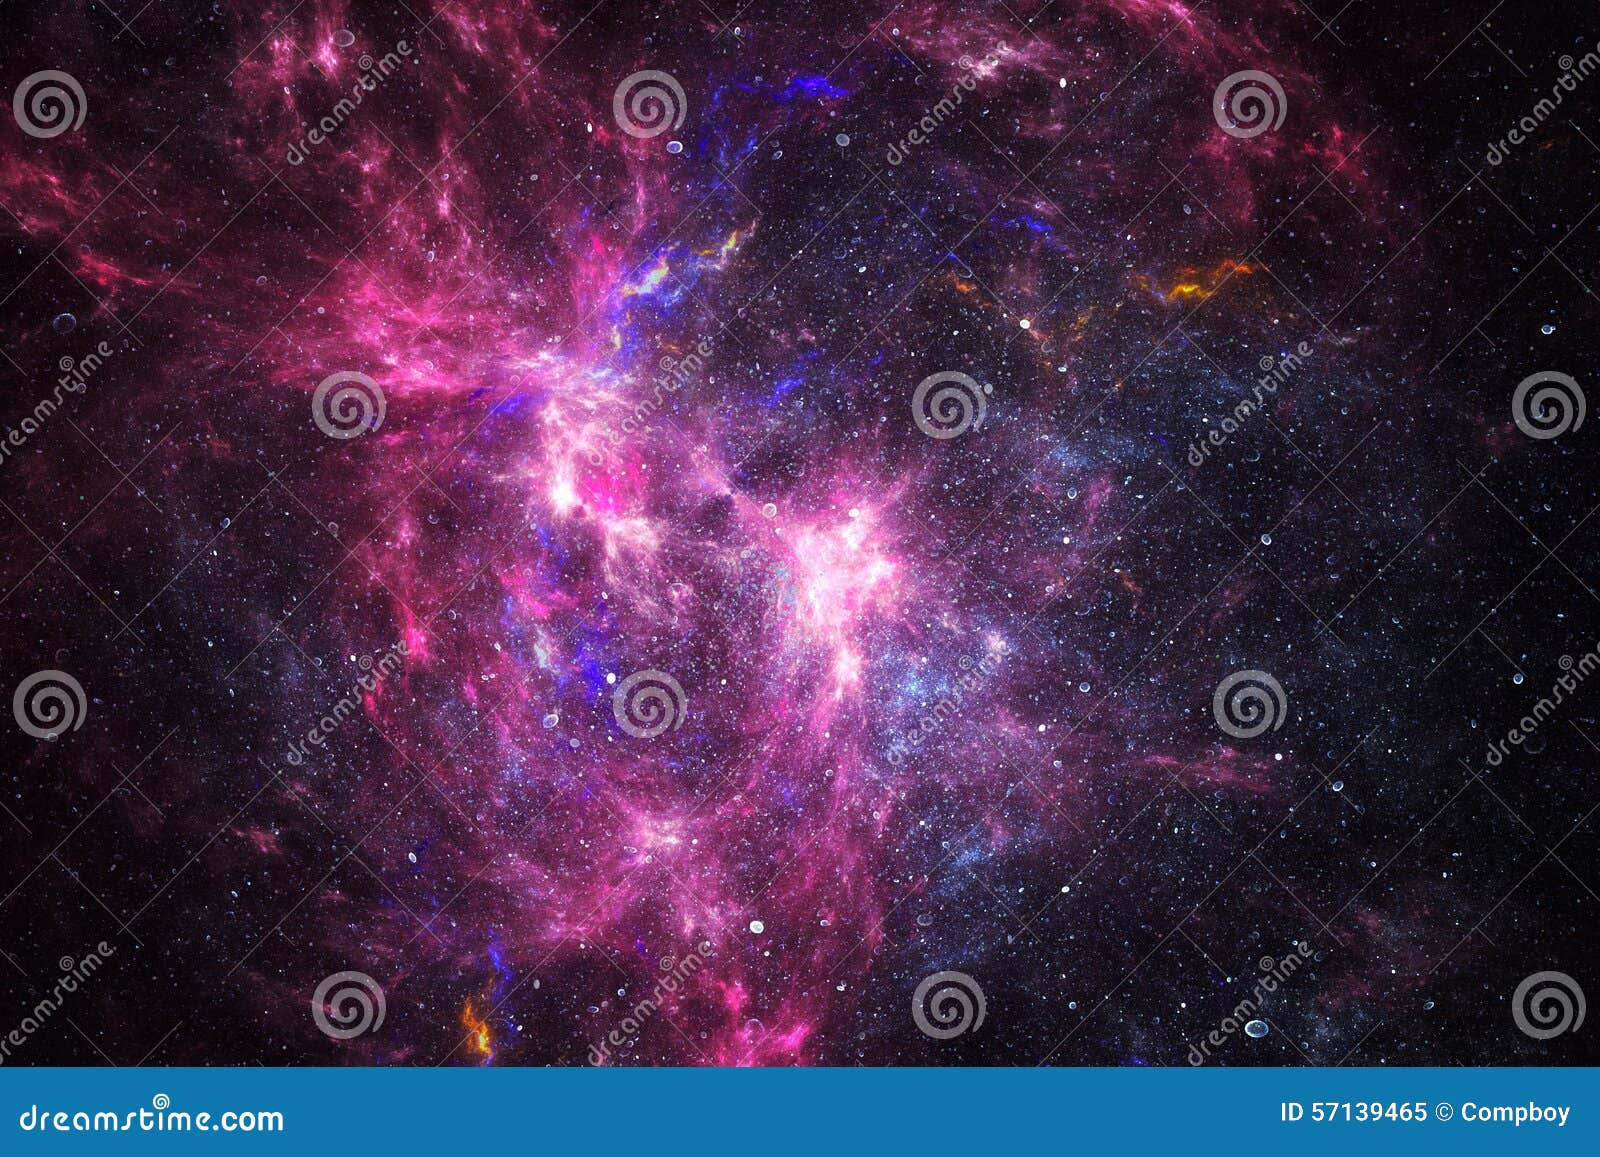 deep space nebula with stars